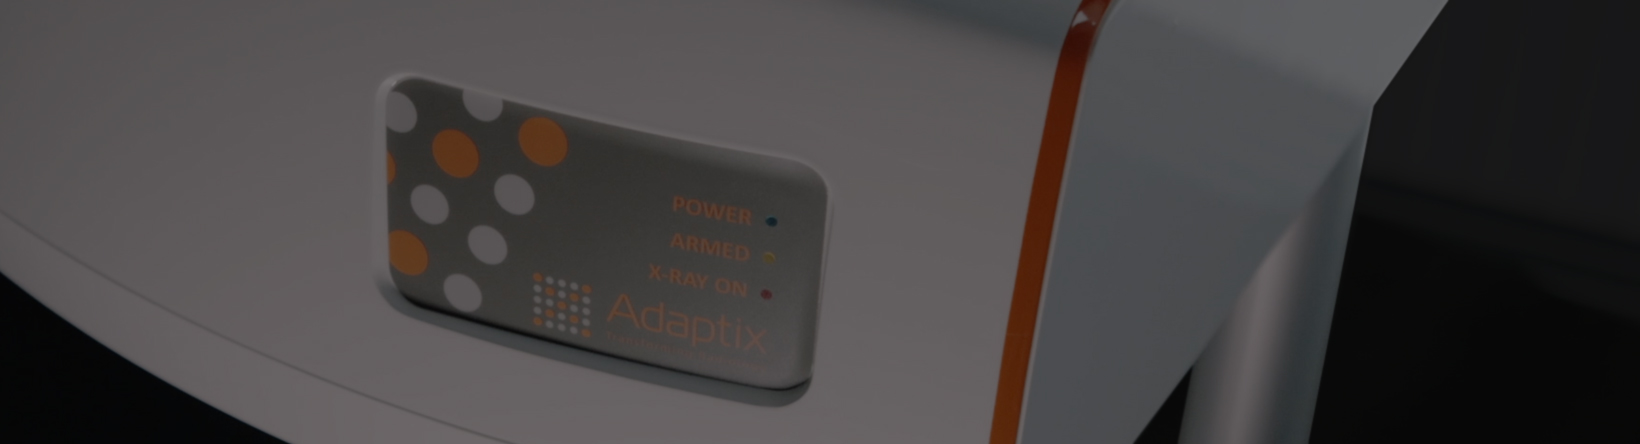 Adaptix-Technology-homepage-1640x444